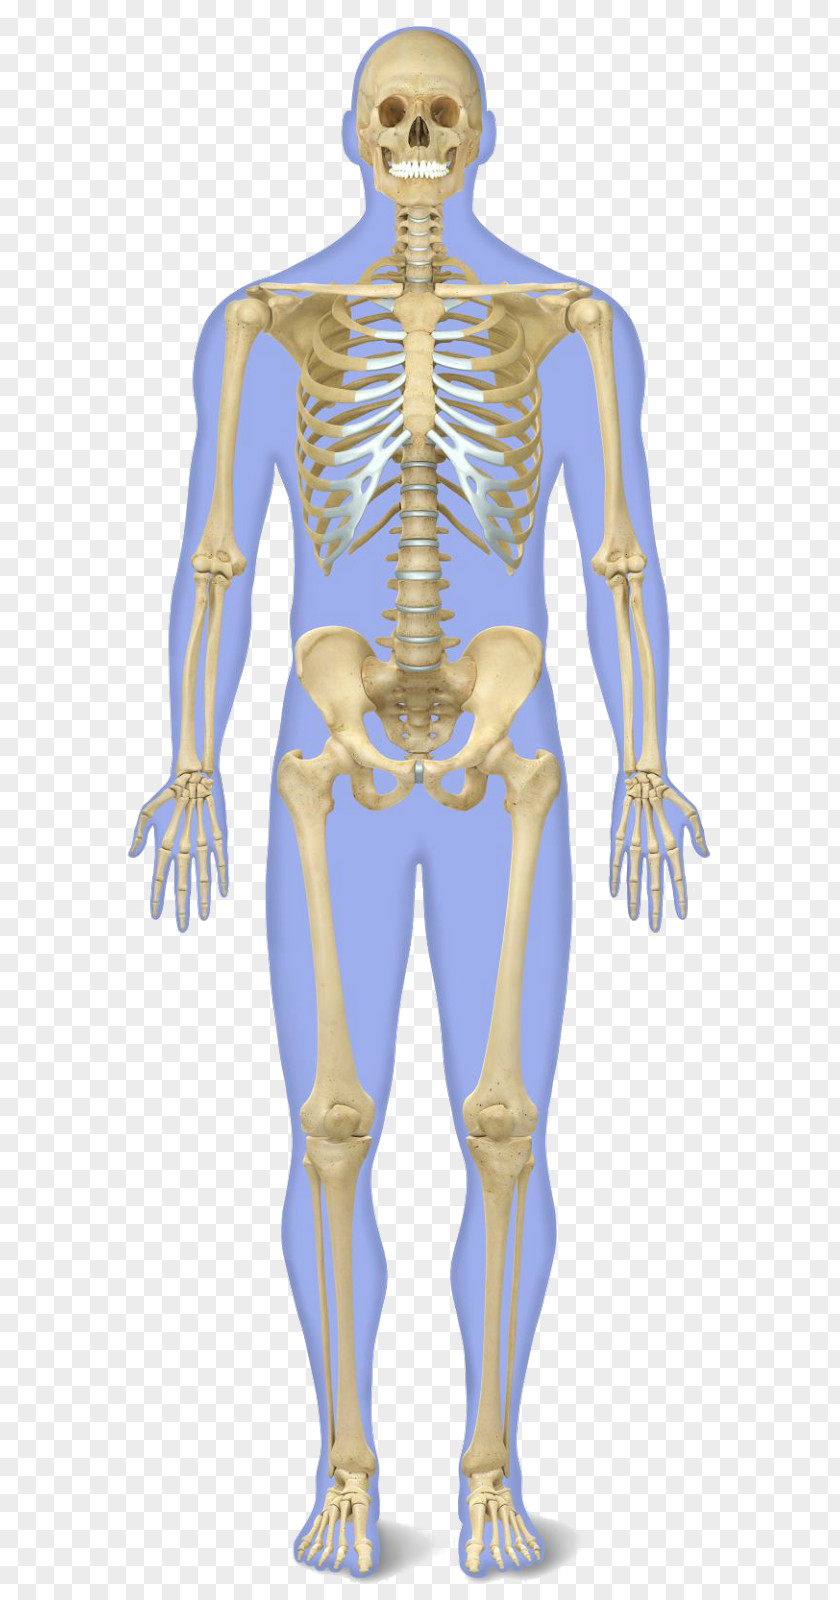 Bones The Human Skeleton Body Anatomy PNG